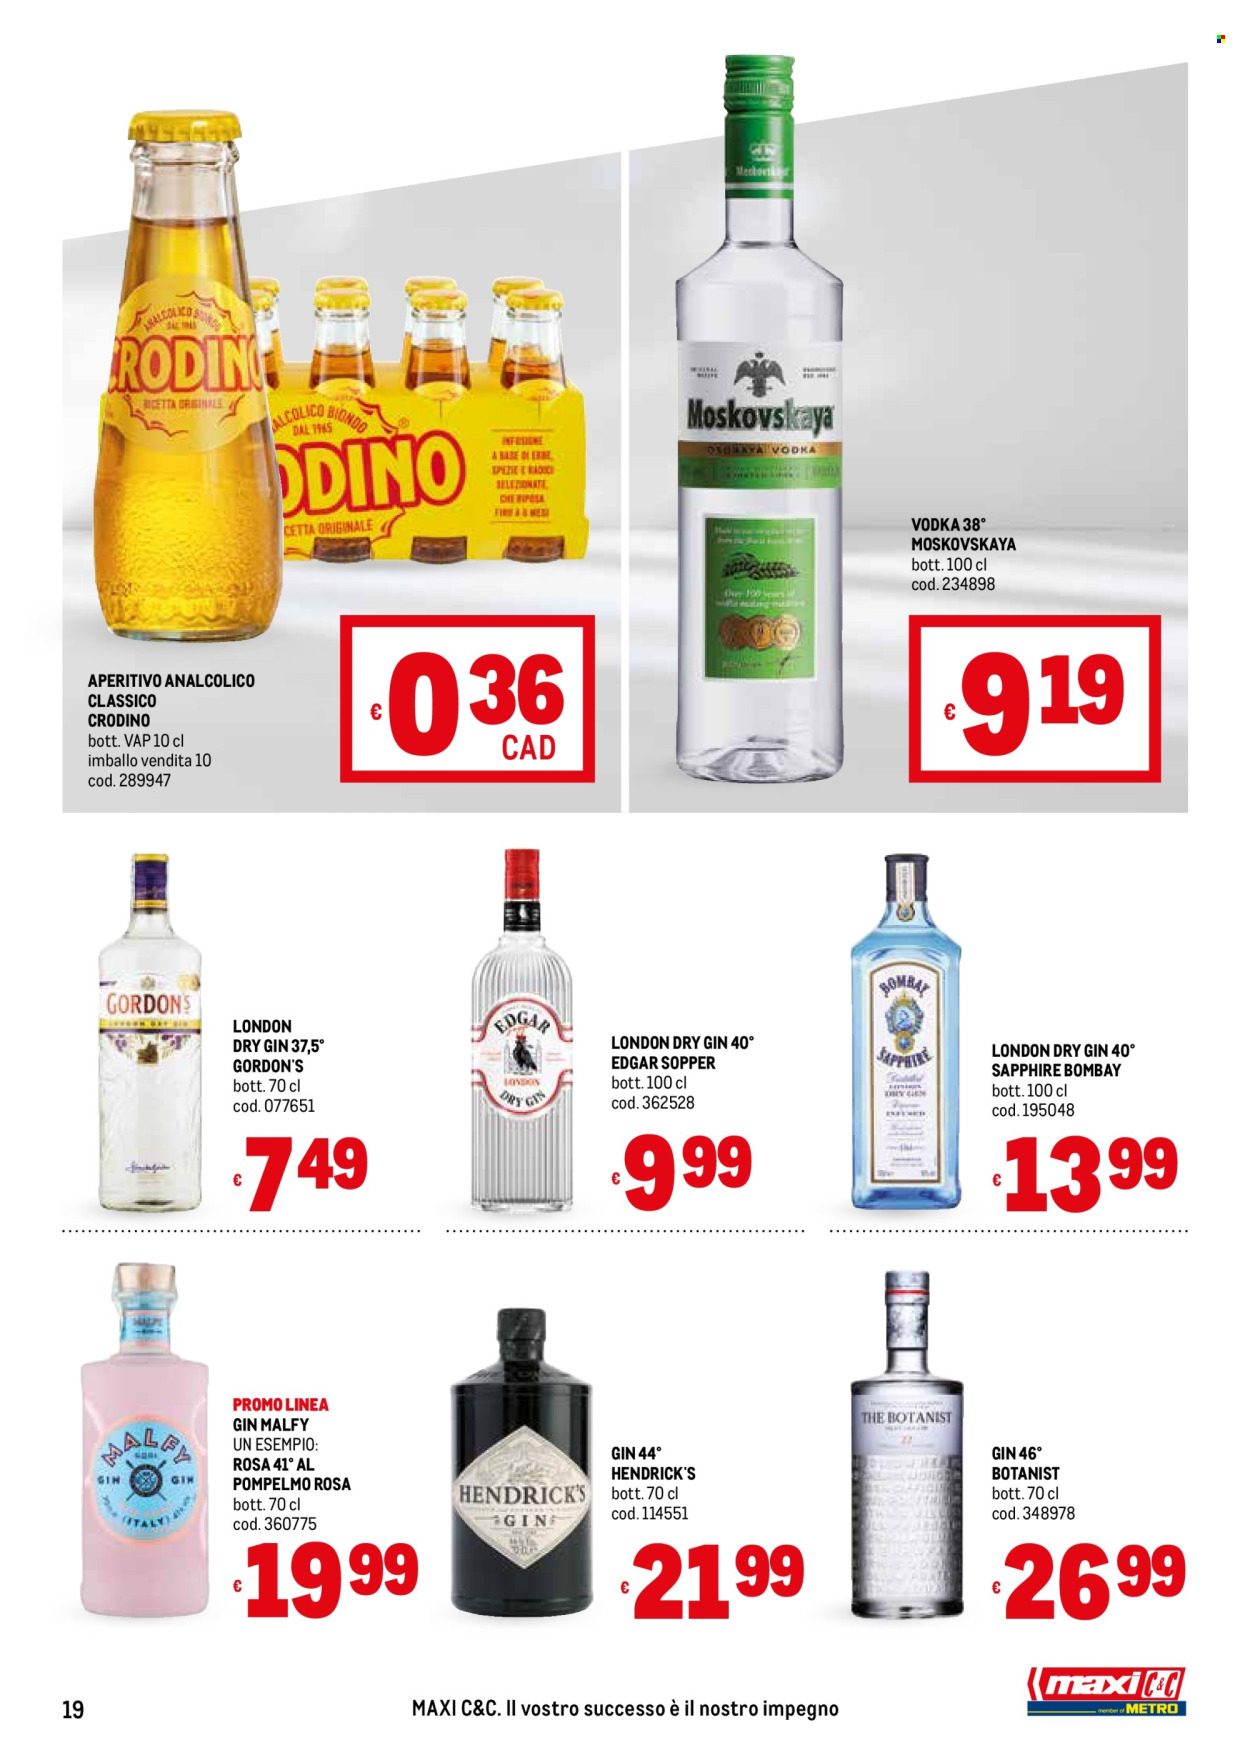 thumbnail - Volantino Metro - Prodotti in offerta - Crodino, vodka, gin, London Dry Gin, Gordon's, Hendrick's, aperitivo. Pagina 19.